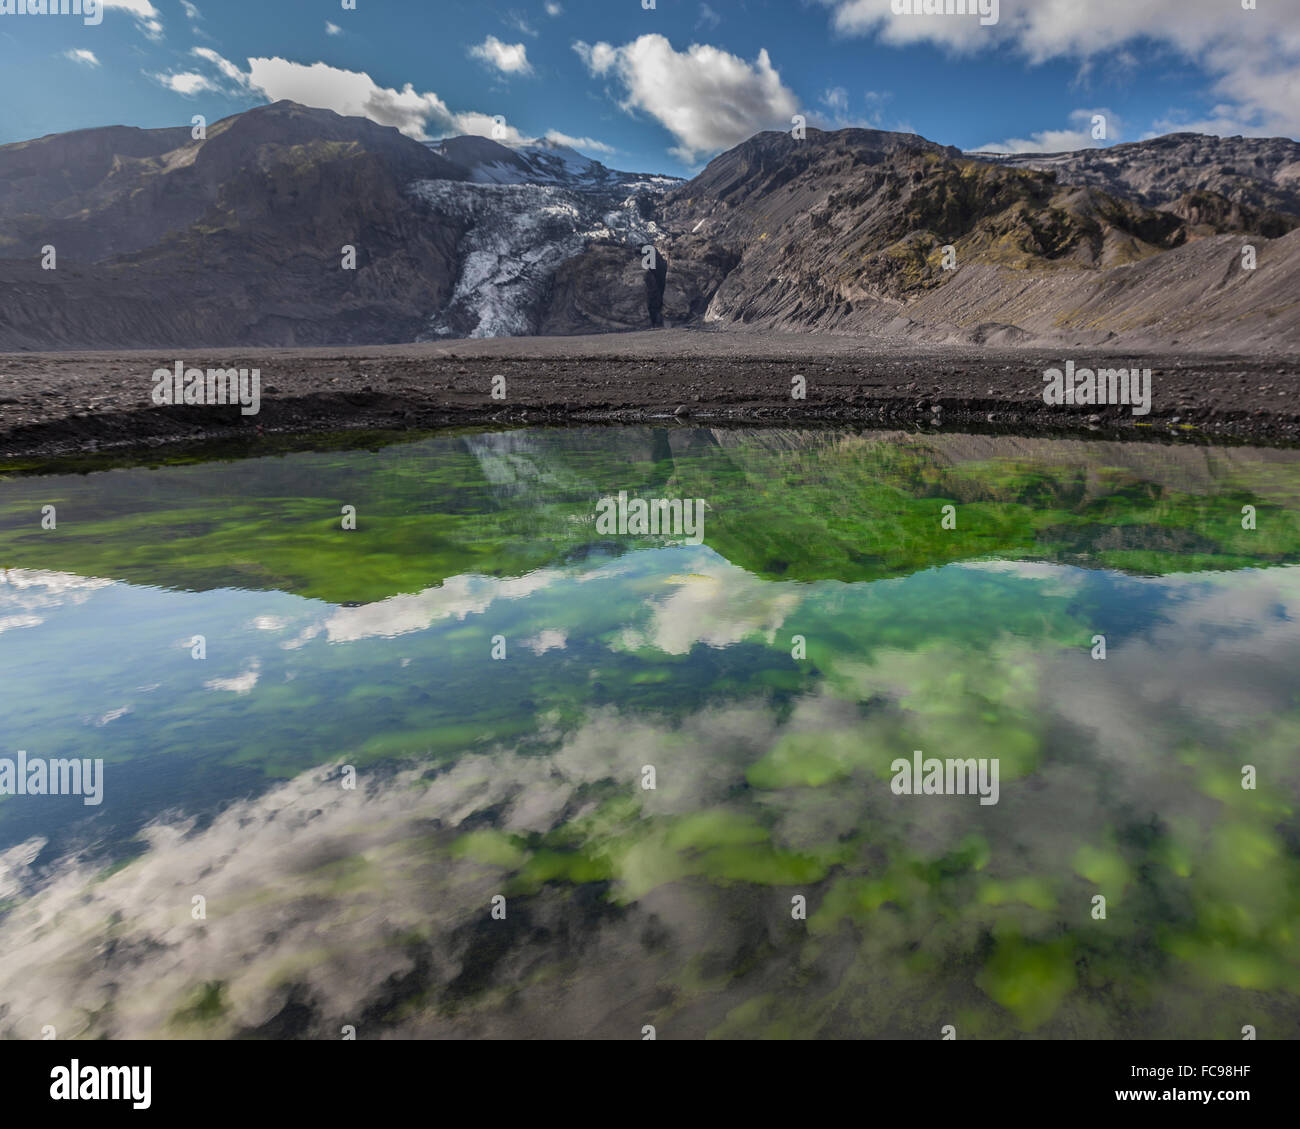 Image miroir en étang, Gigjokull- glacier émissaire de Eyjafjallajokull glacière, à l'Islande Banque D'Images